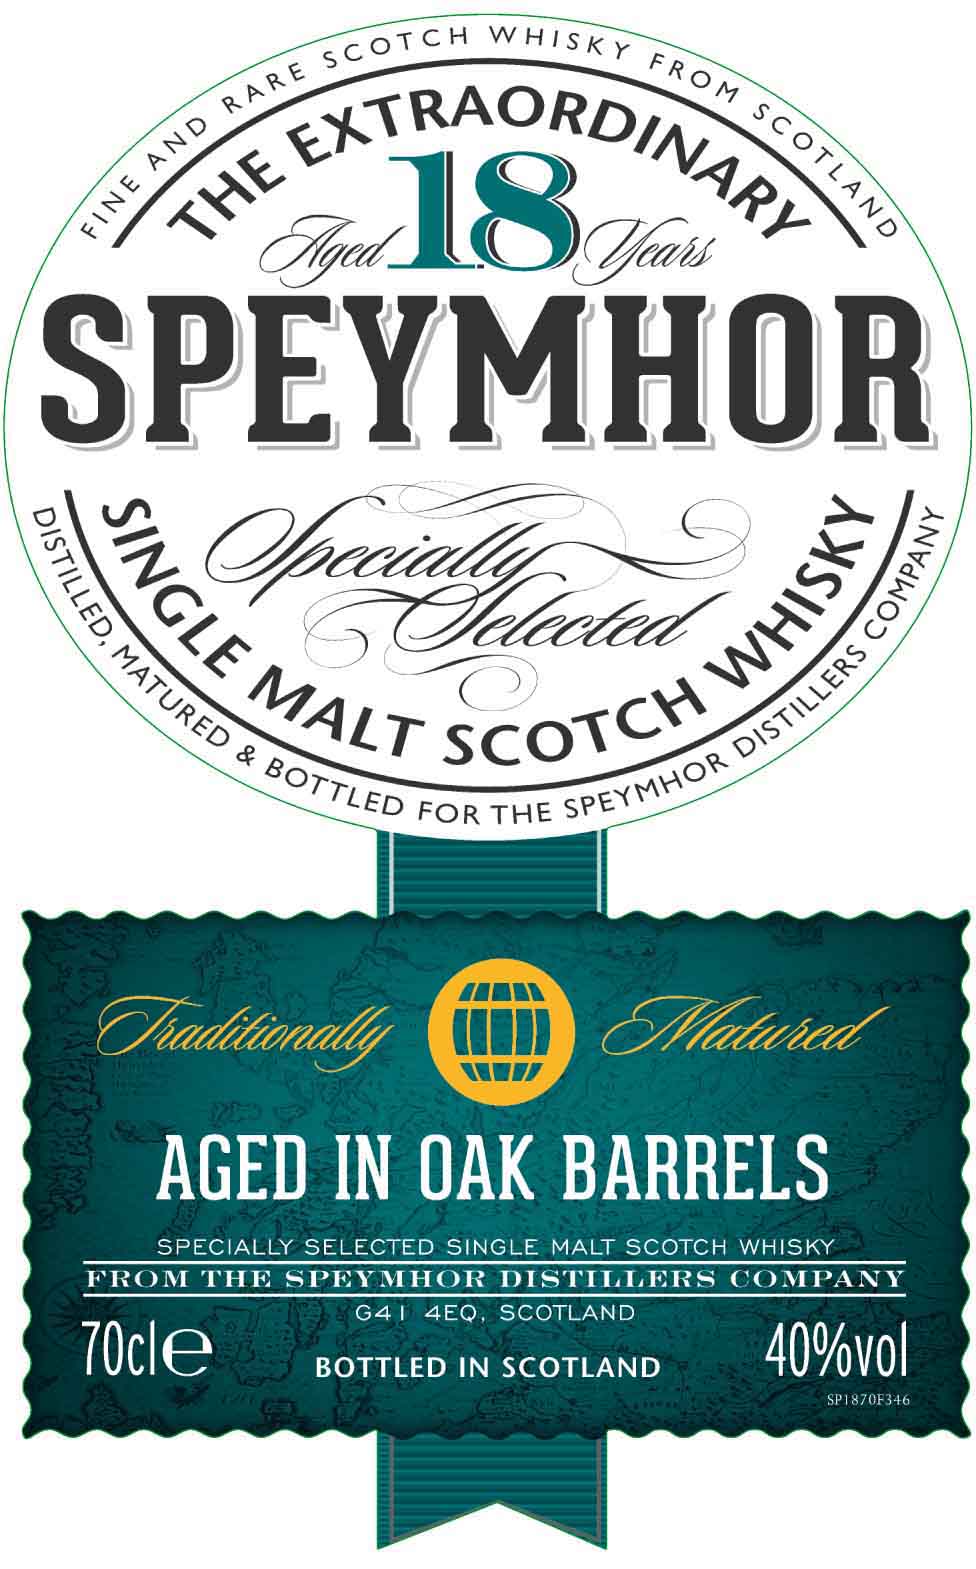 Speymhor - 18 Year Old Single Malt Scotch Whisky label